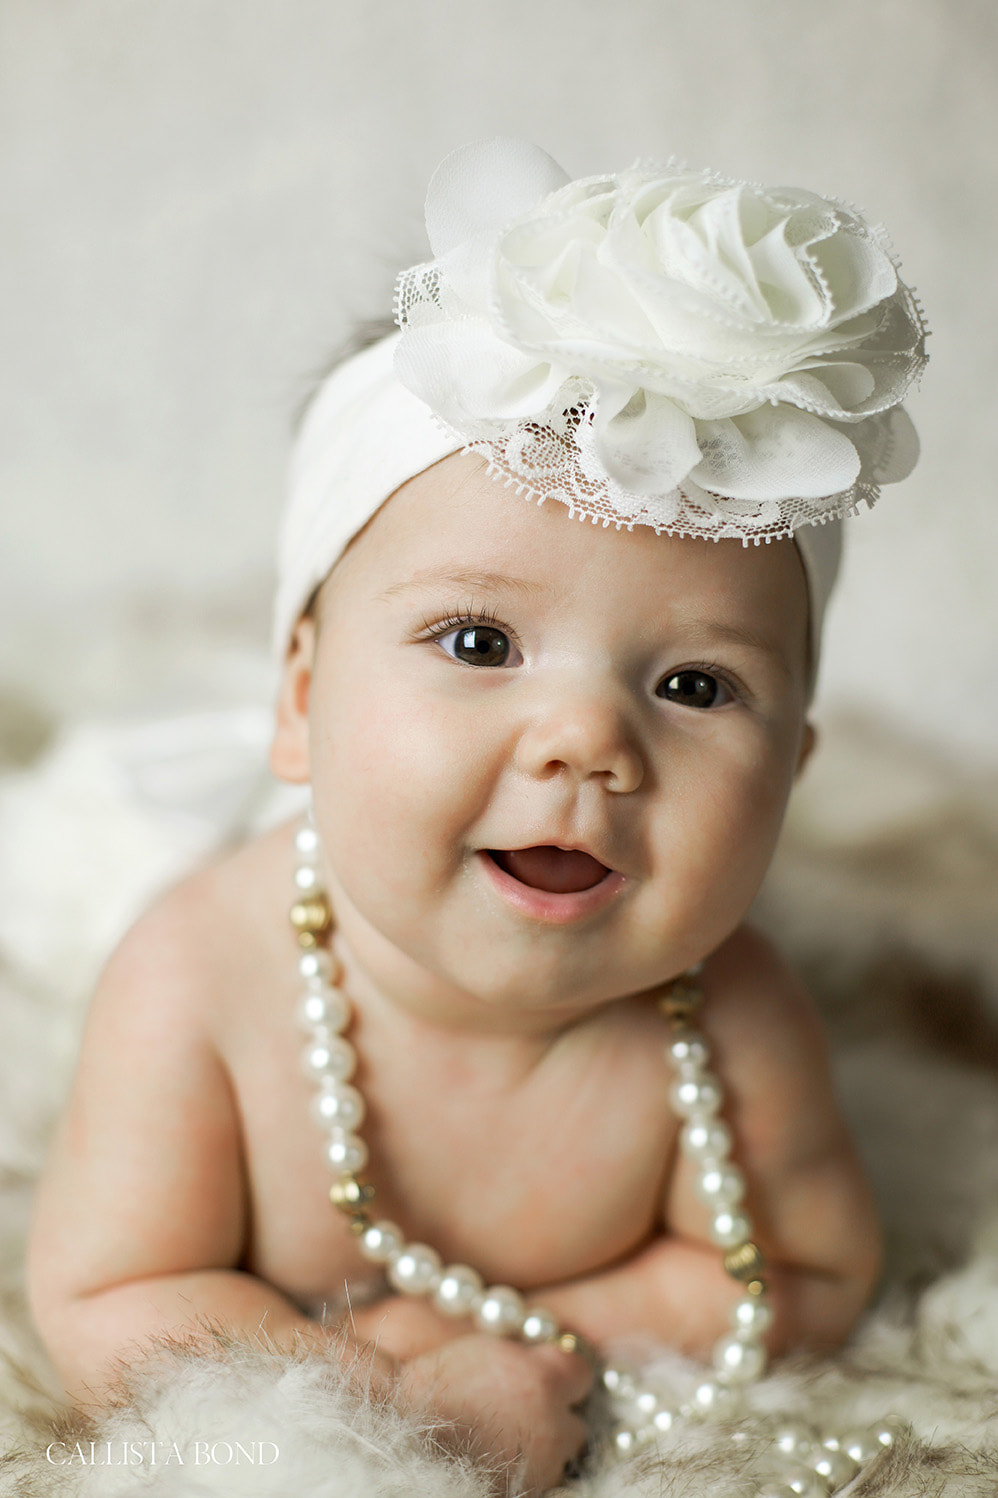 Callista Bond Photography, Family Photographer, Kansas City, Columbia, Missouri, Kansas, Blue Springs, Infant, Newborn, Baby, White, Studio, Ruffles, Flower, Portraits